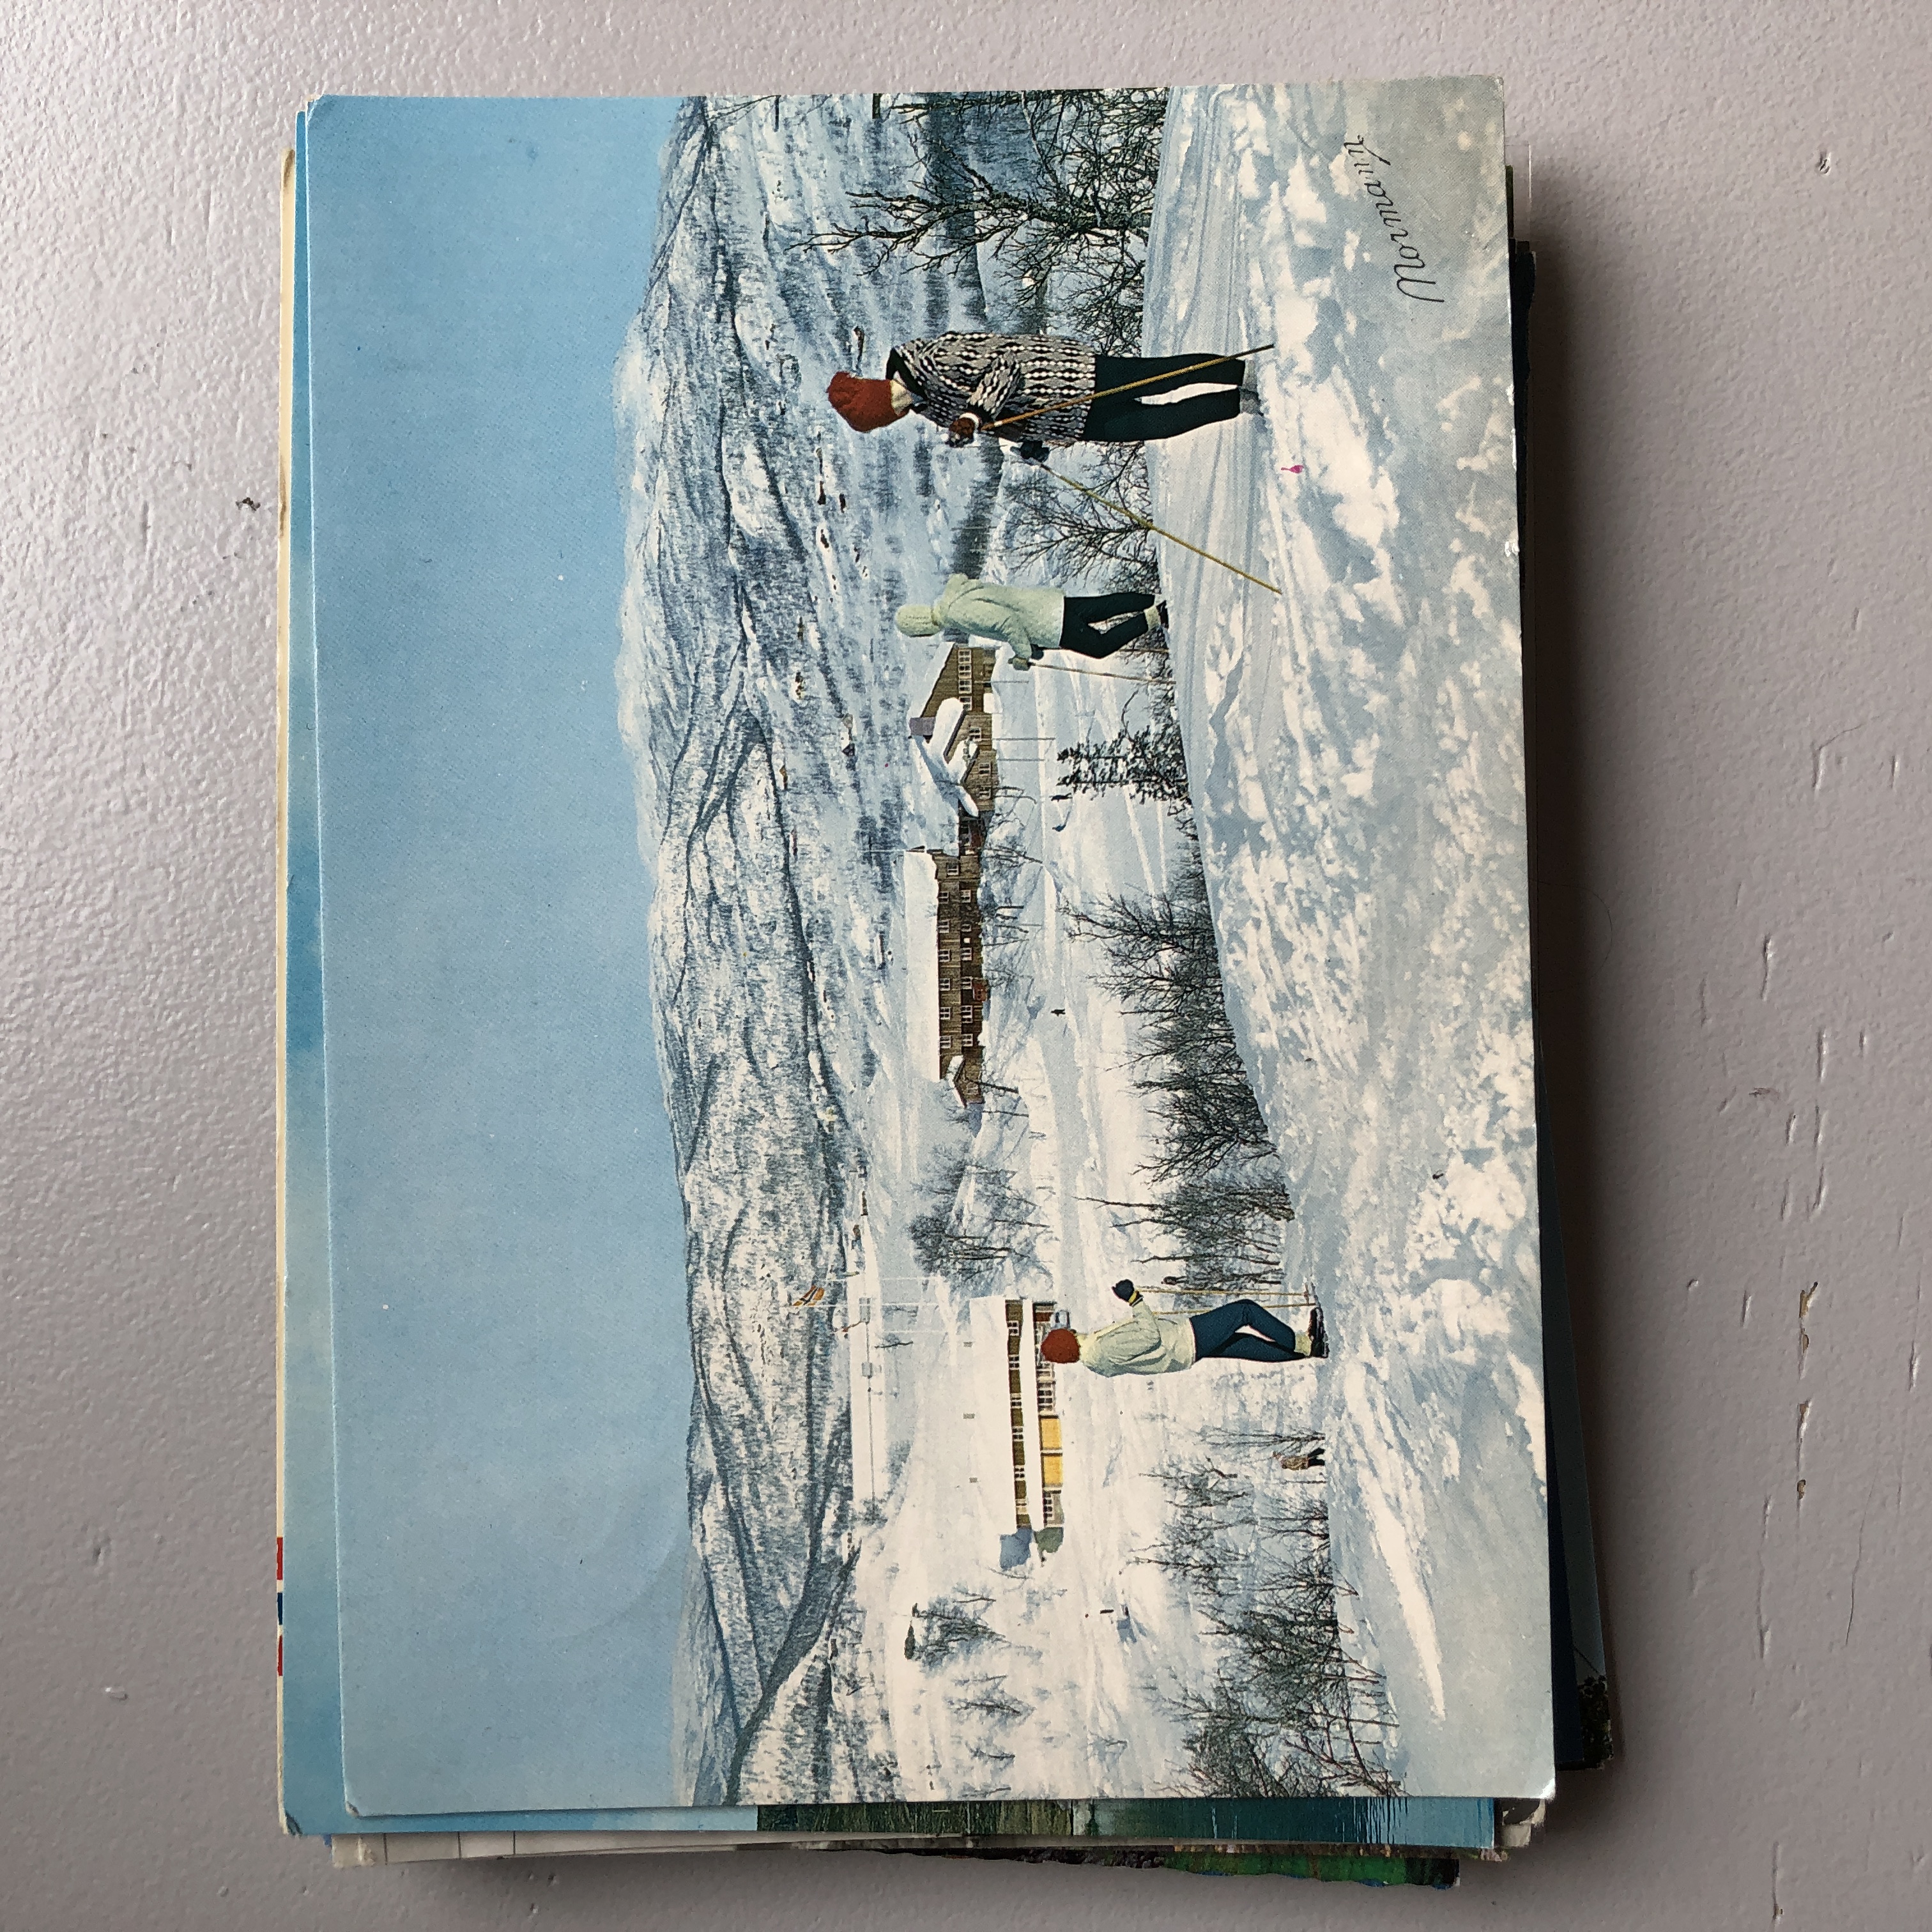 "Skinnarbu" høgfjellstue, 1968, Møsvann, Rjukan, 1000 m.o.h, H-25-37, Normann